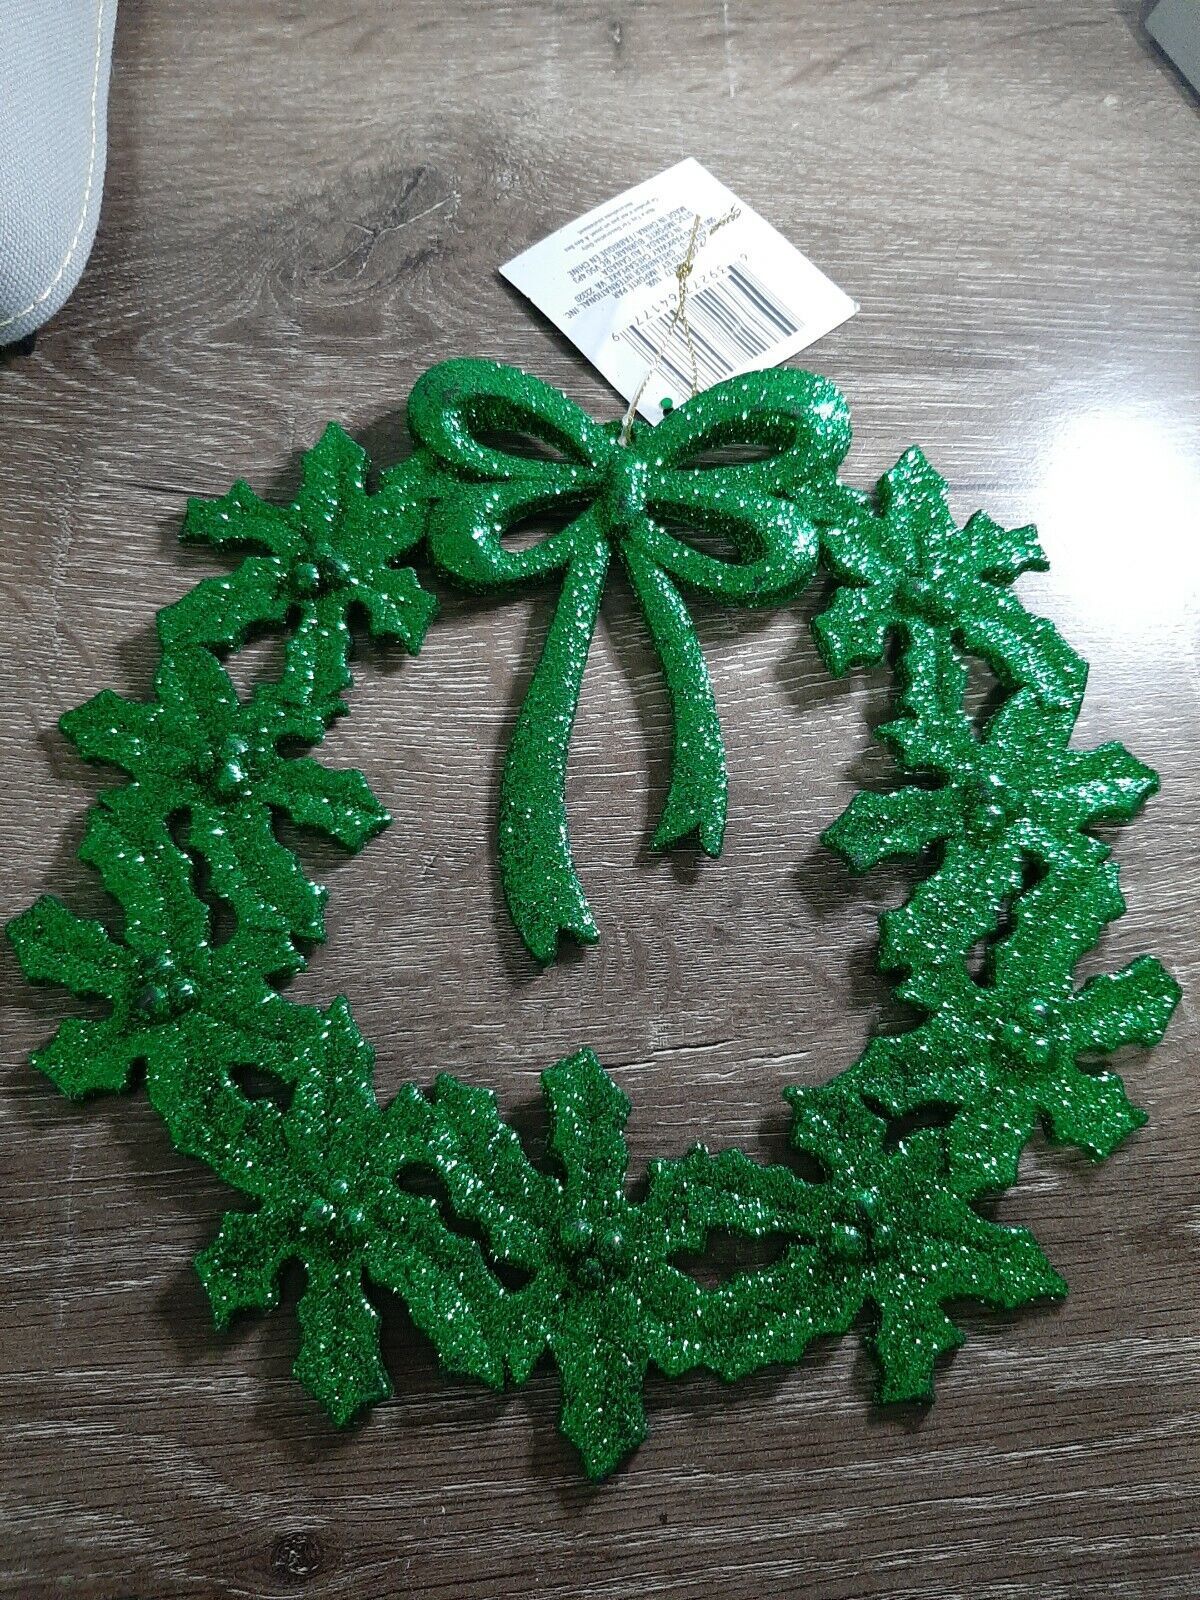 (2) Christmas House Green Glittery Poinsettia Ornament Decoration. New - $14.80